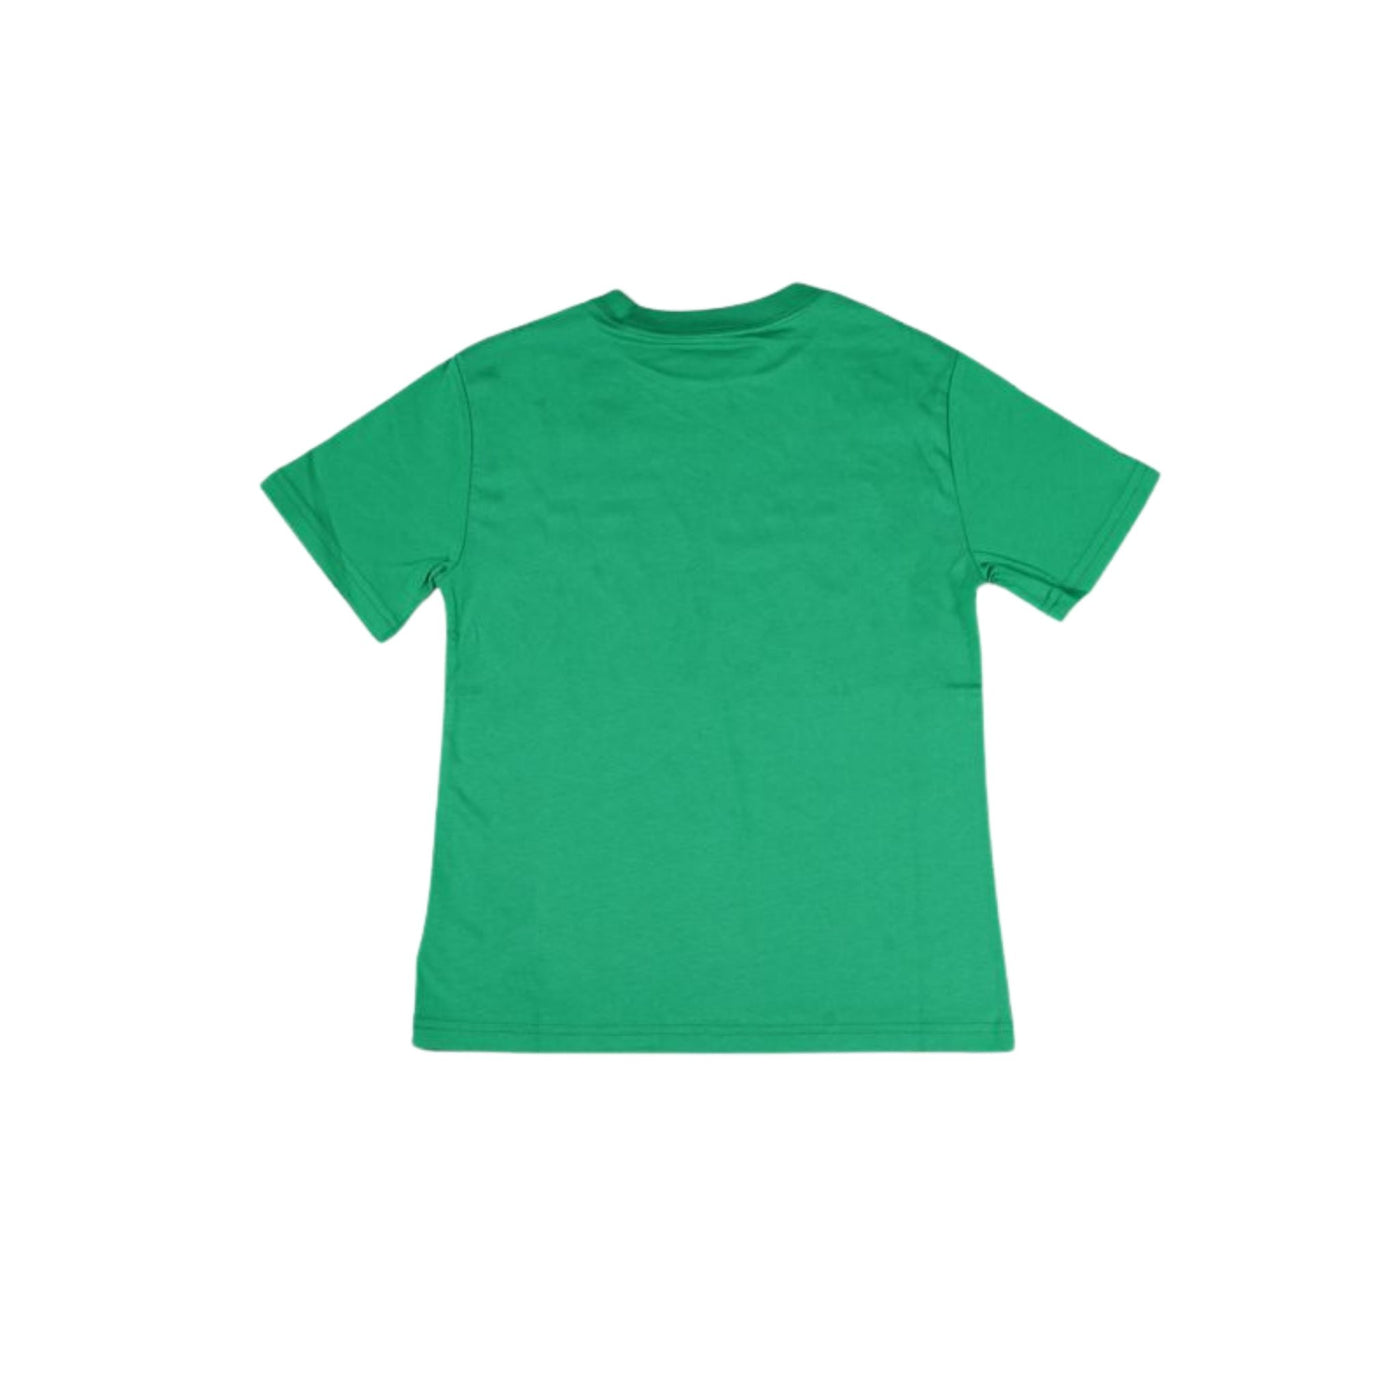 T-shirt verde con scritta Polo Ralph Lauren vista retro